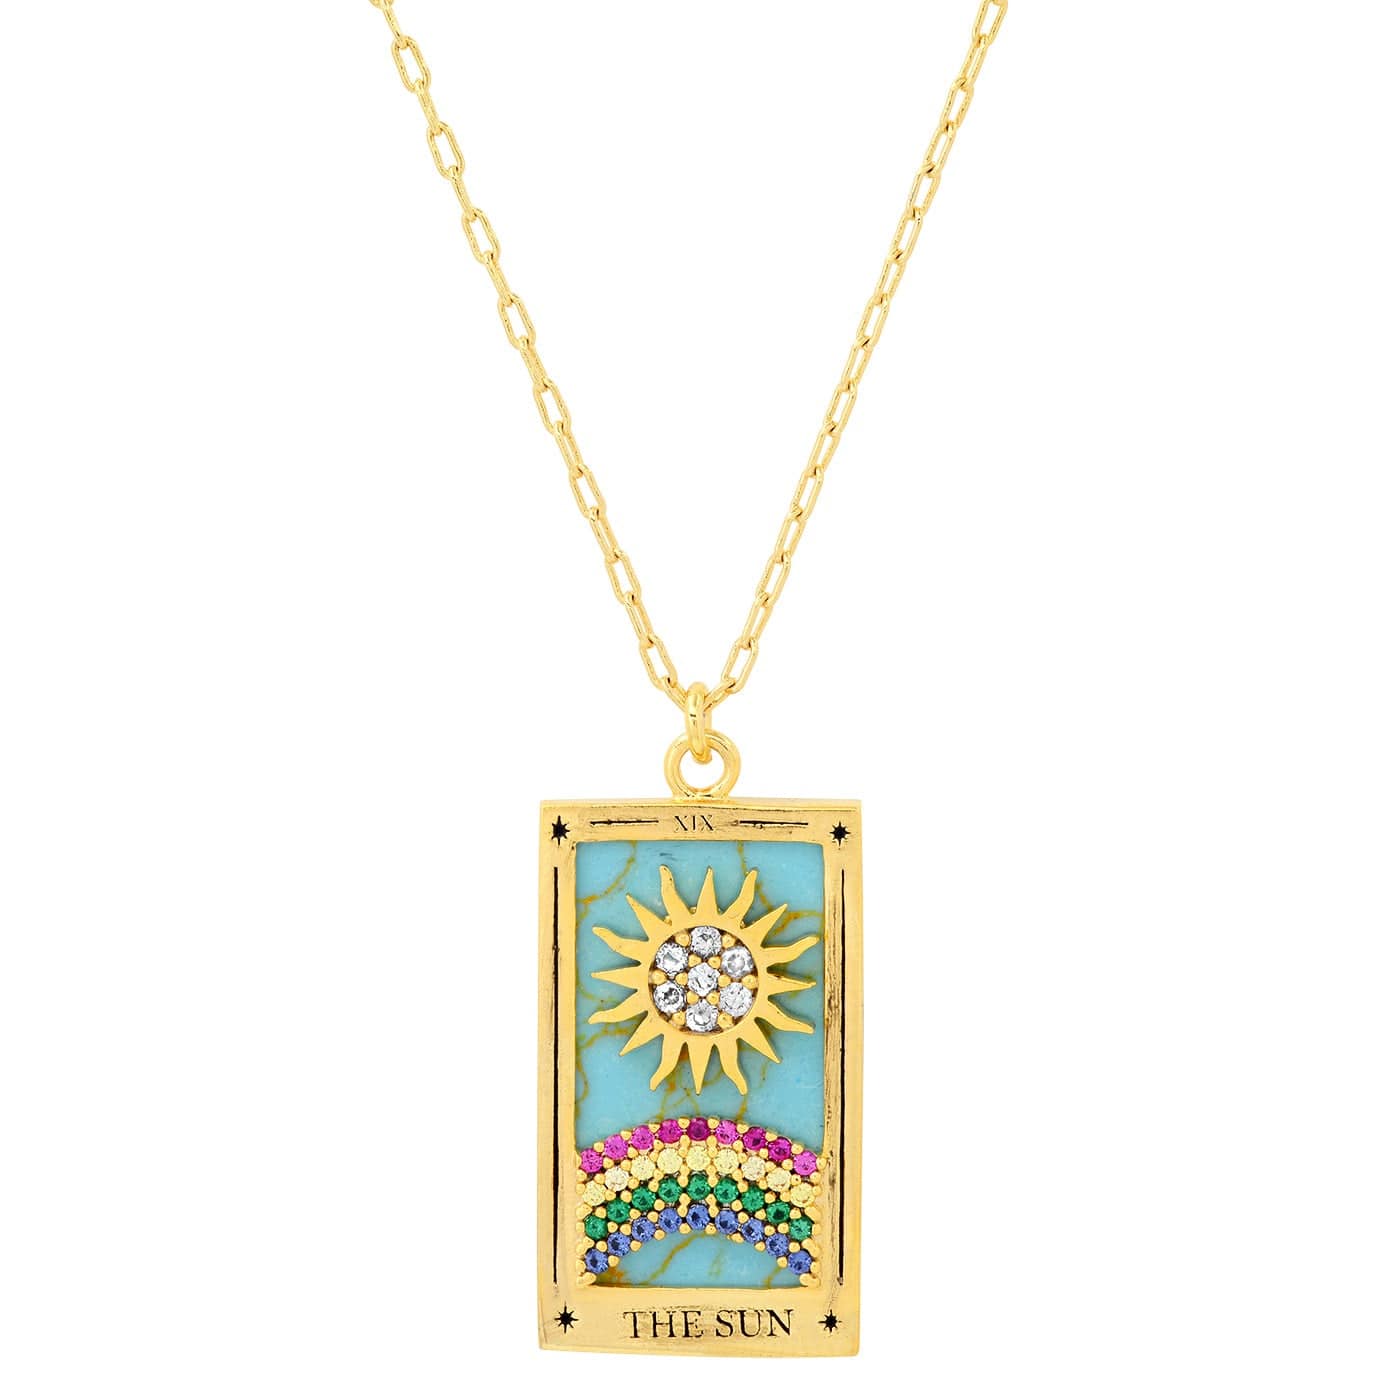 TAI JEWELRY Necklace The Sun Tarot Card Necklace